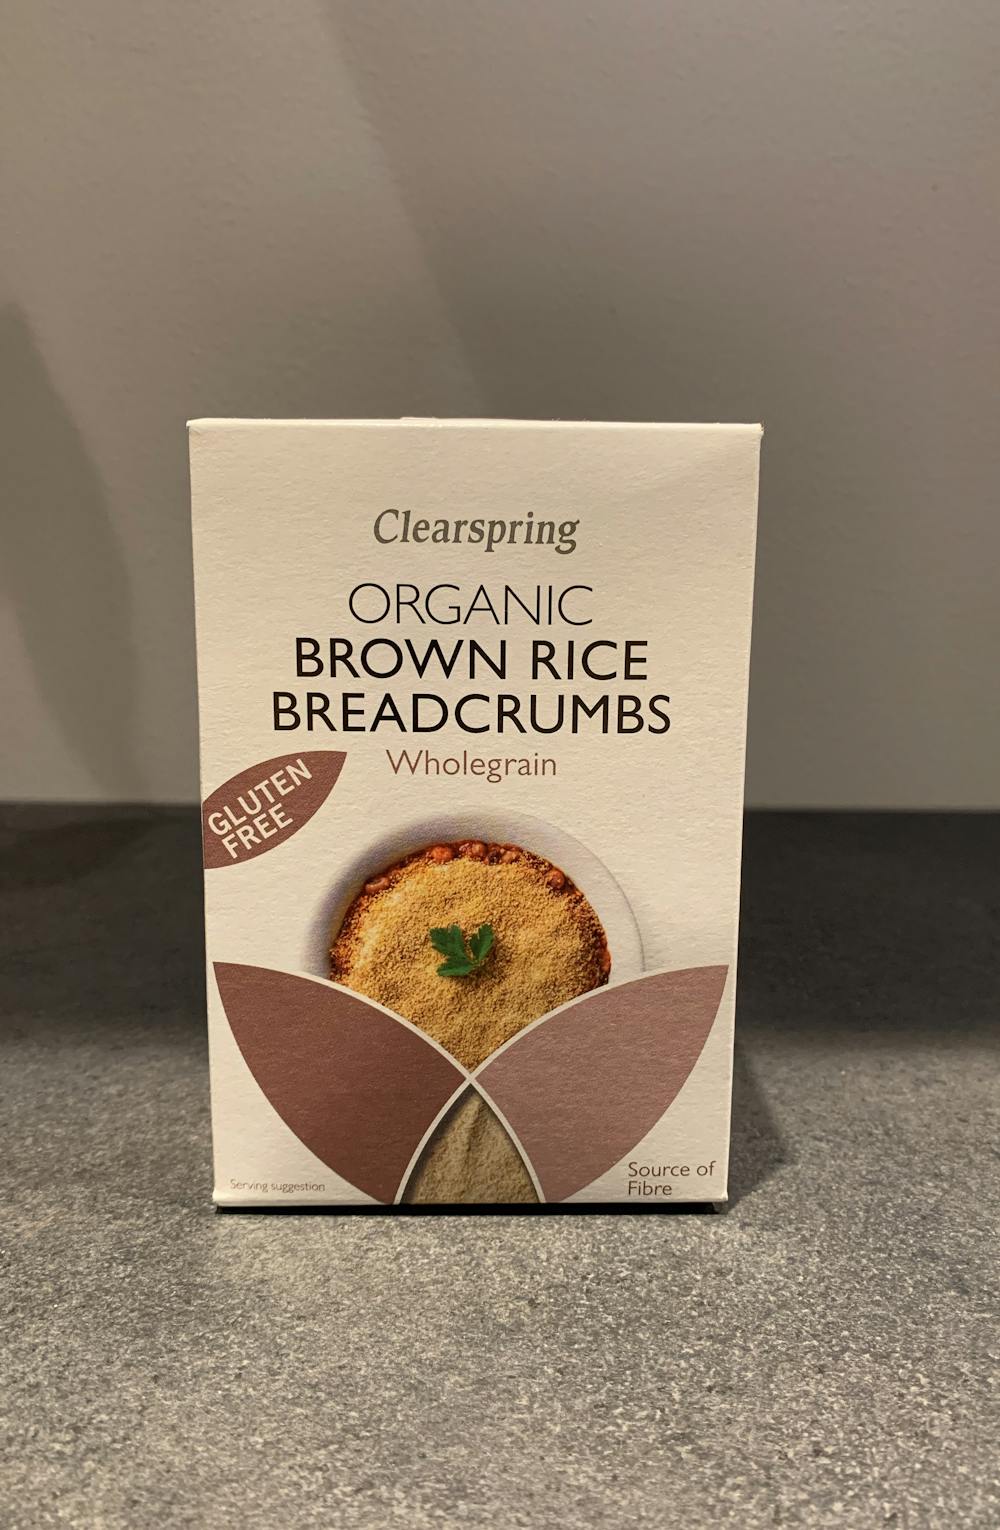 Organic brown rice breadcrumbs, Clearspring